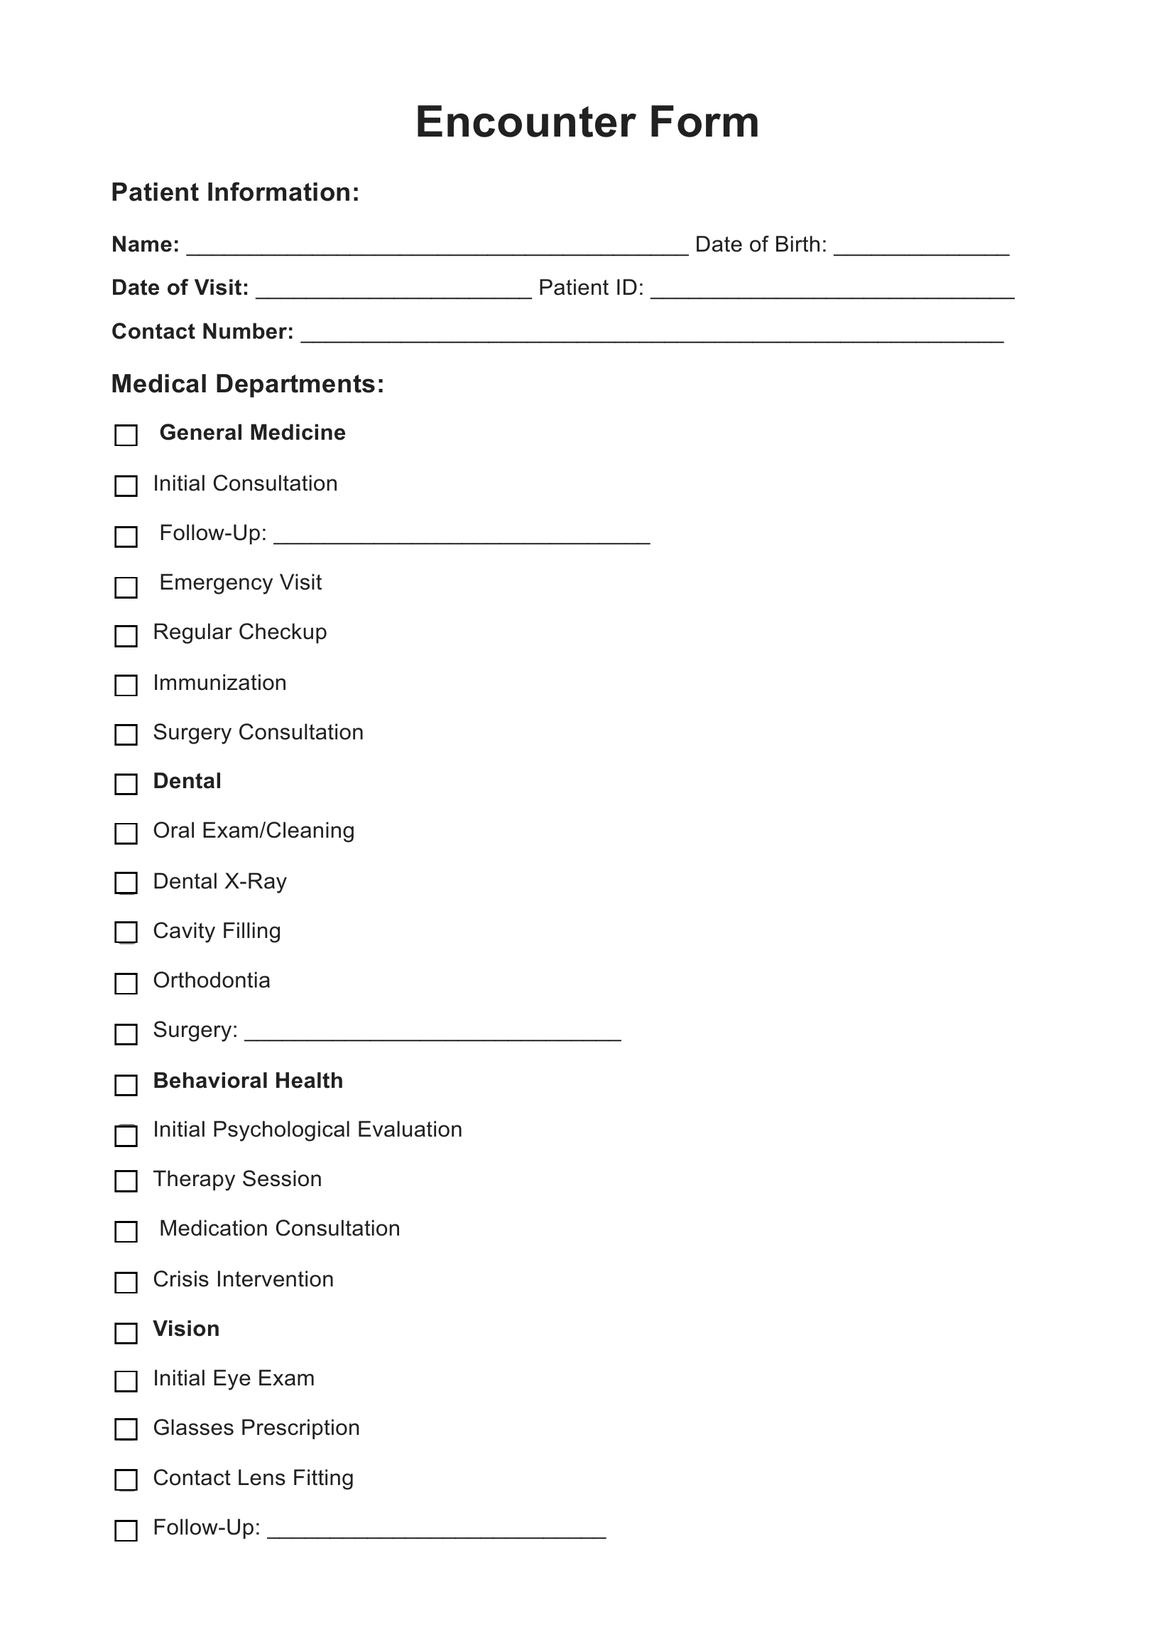 Encounter Form PDF Example